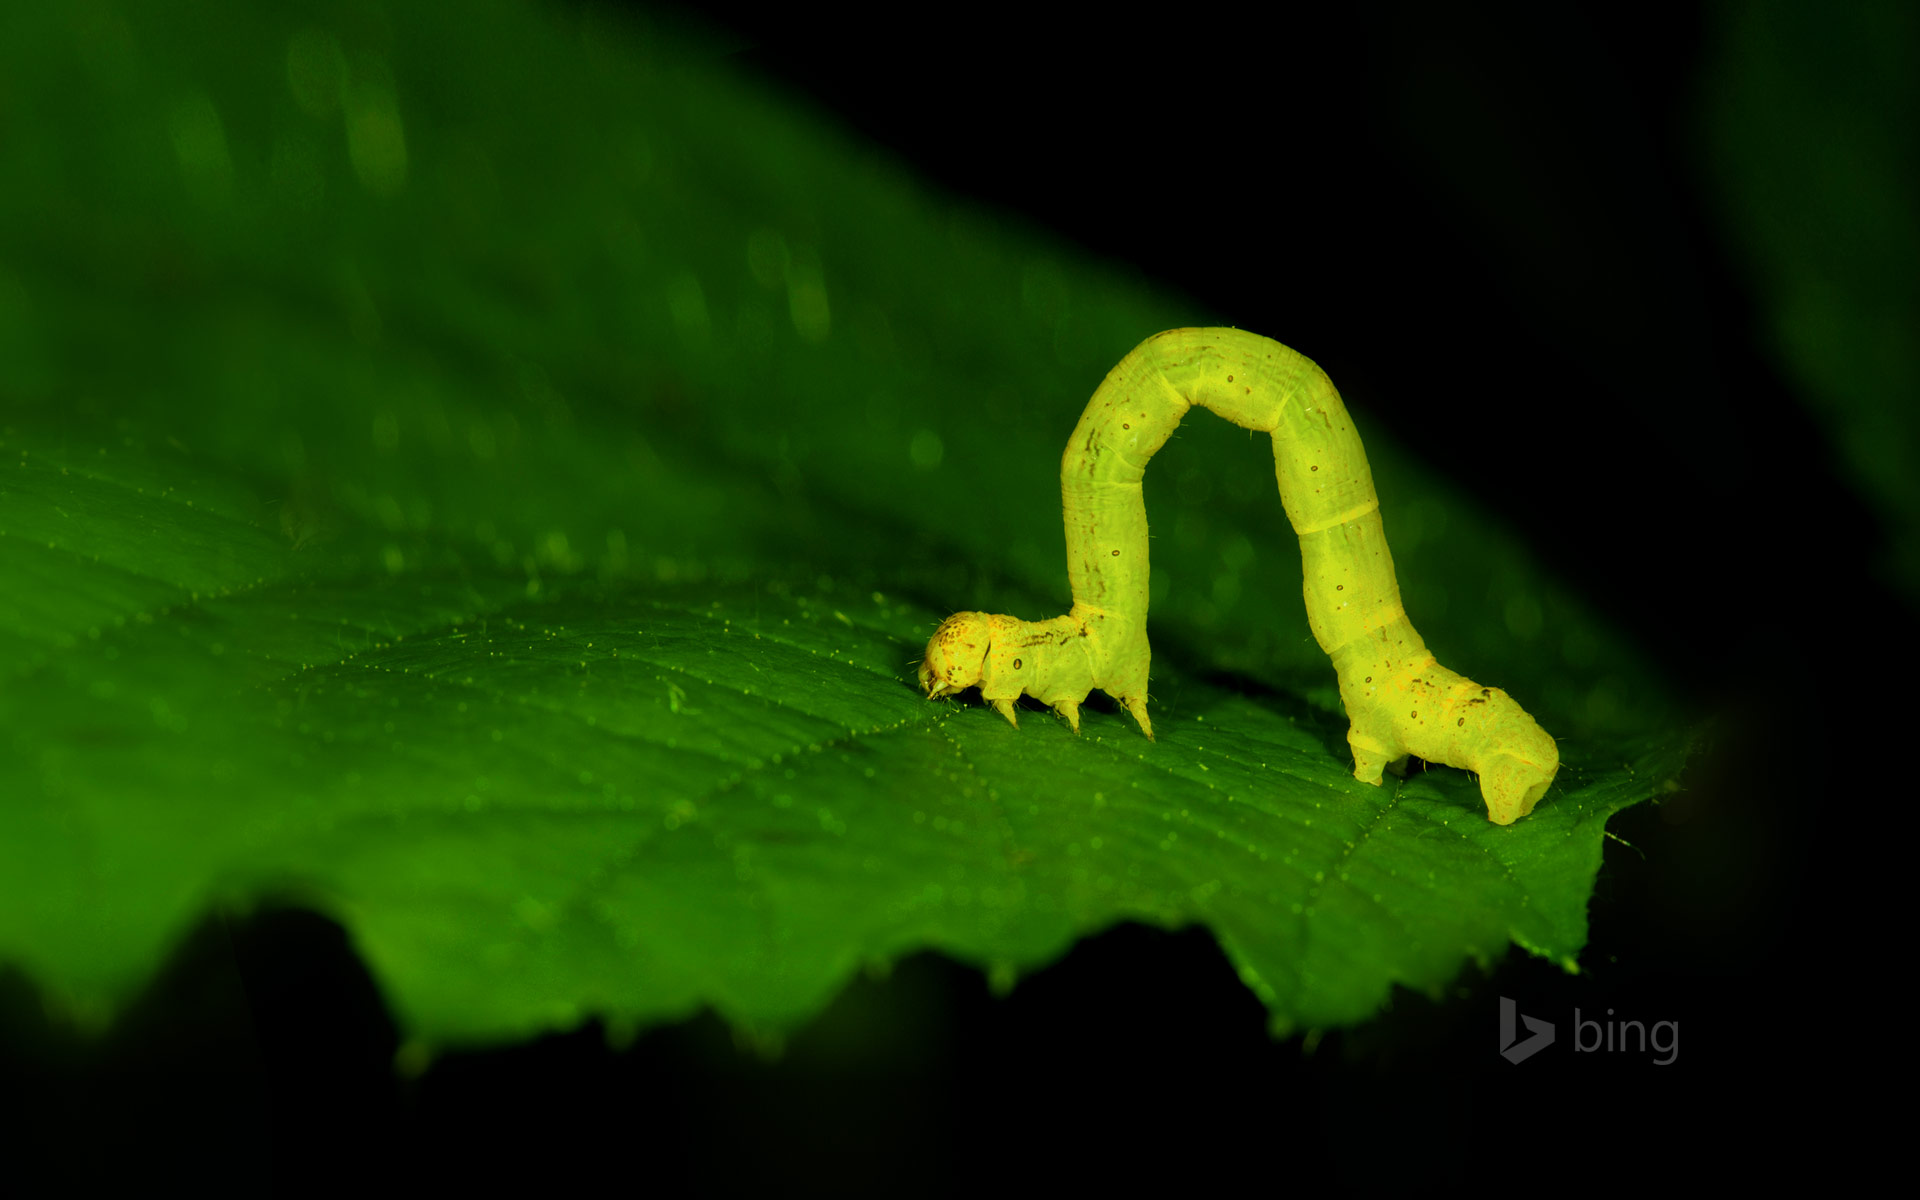 Geometer moth larva, aka an inchworm